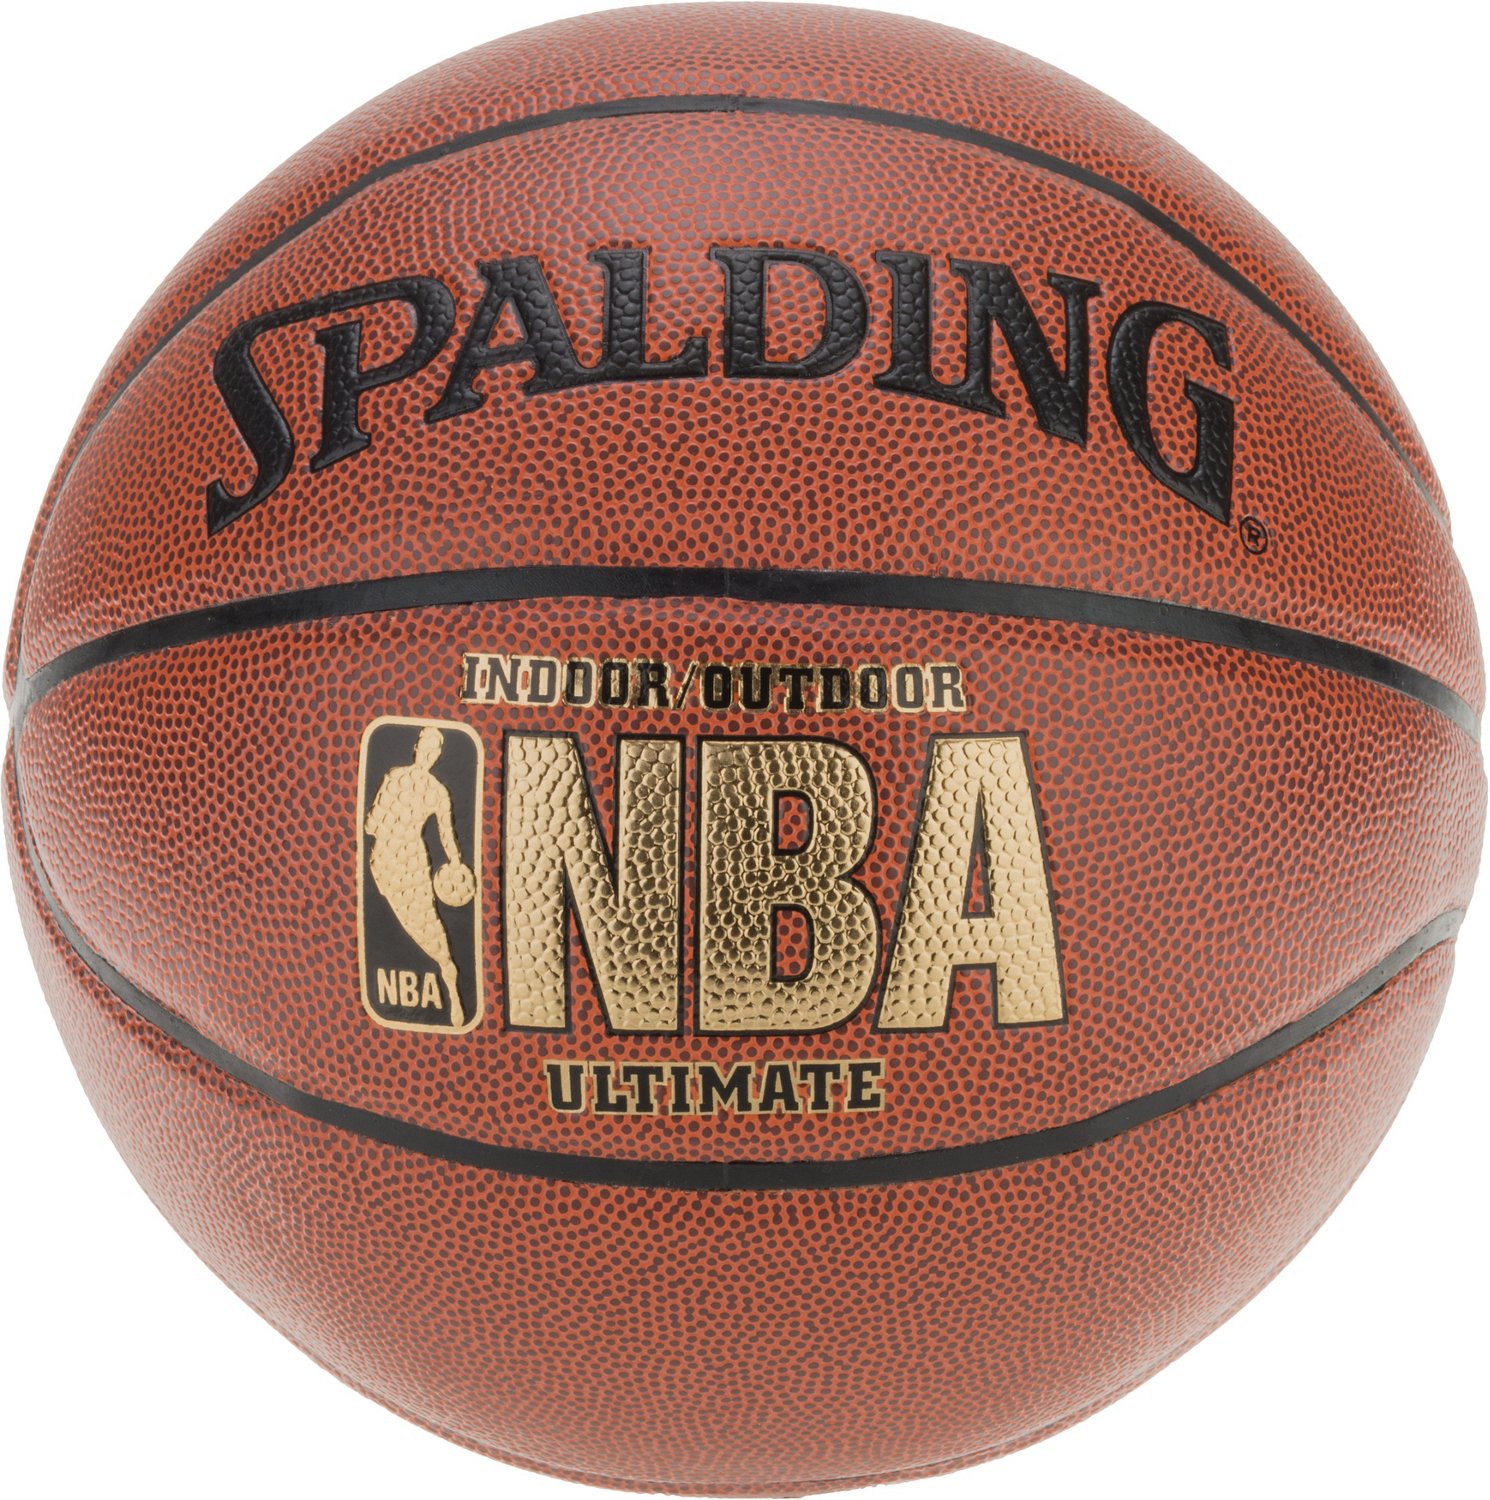 Spalding Basketball Manual